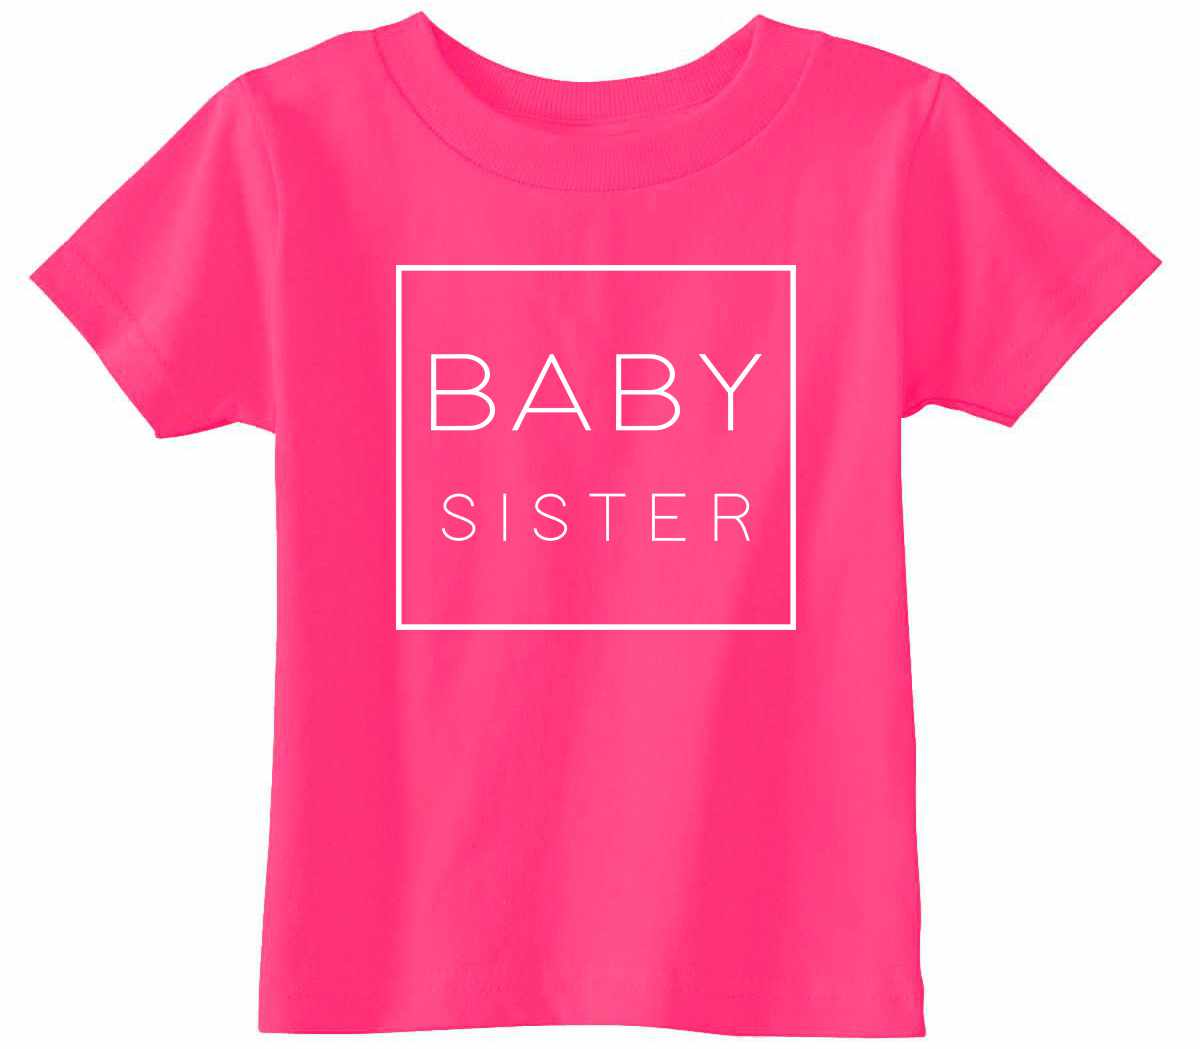 Baby Sister - Box on Infant-Toddler T-Shirt (#1349-7)